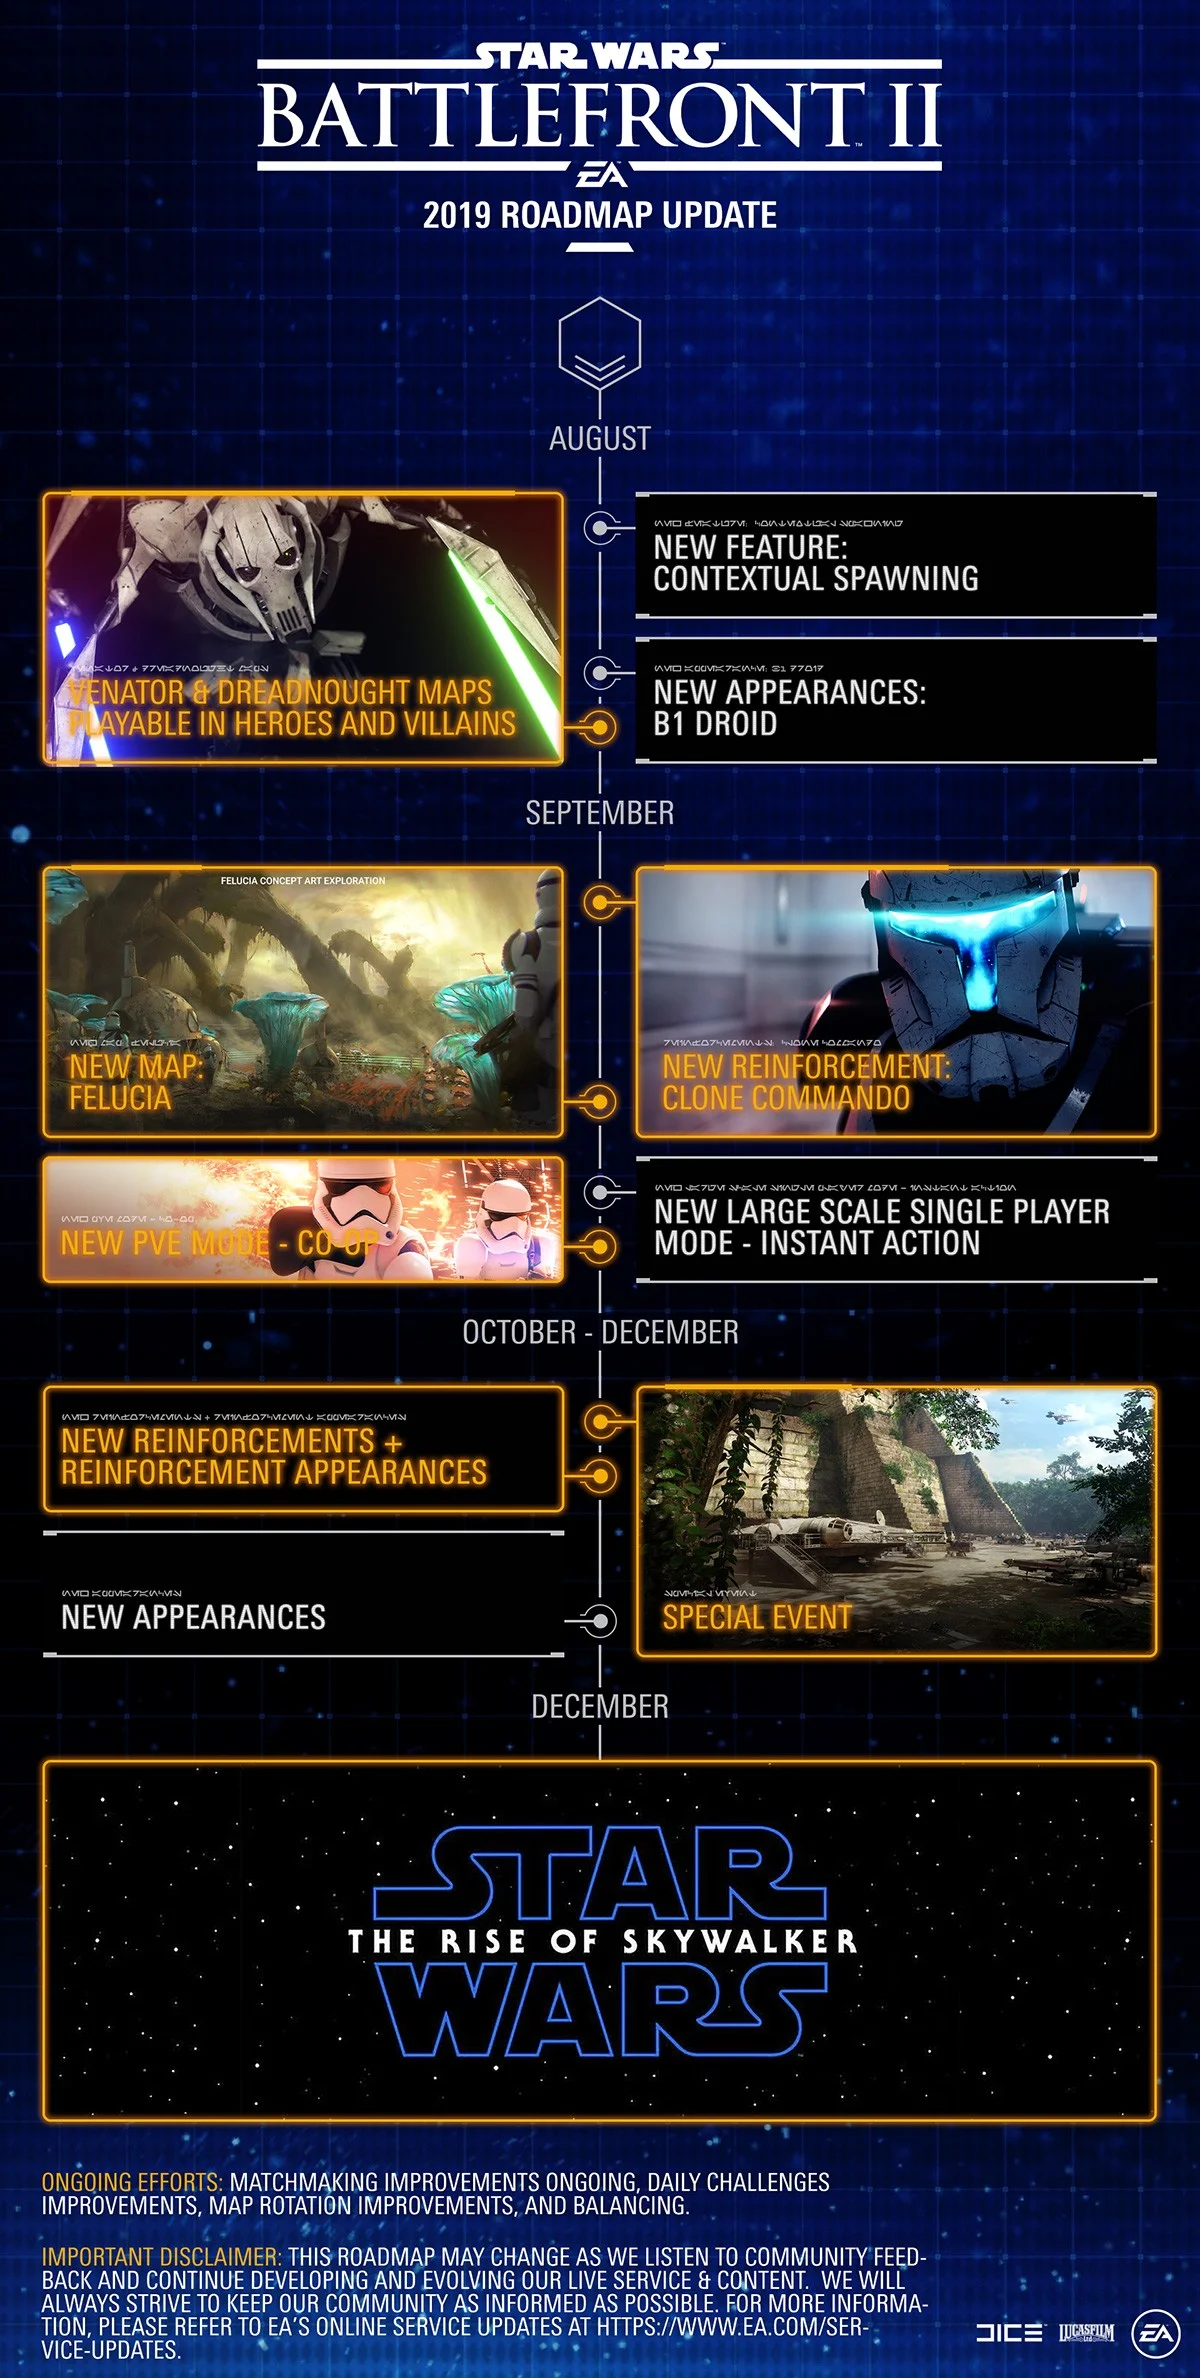 Скоро в Star Wars: Battlefront II появится кооператив на четверых и клон-коммандос - фото 3